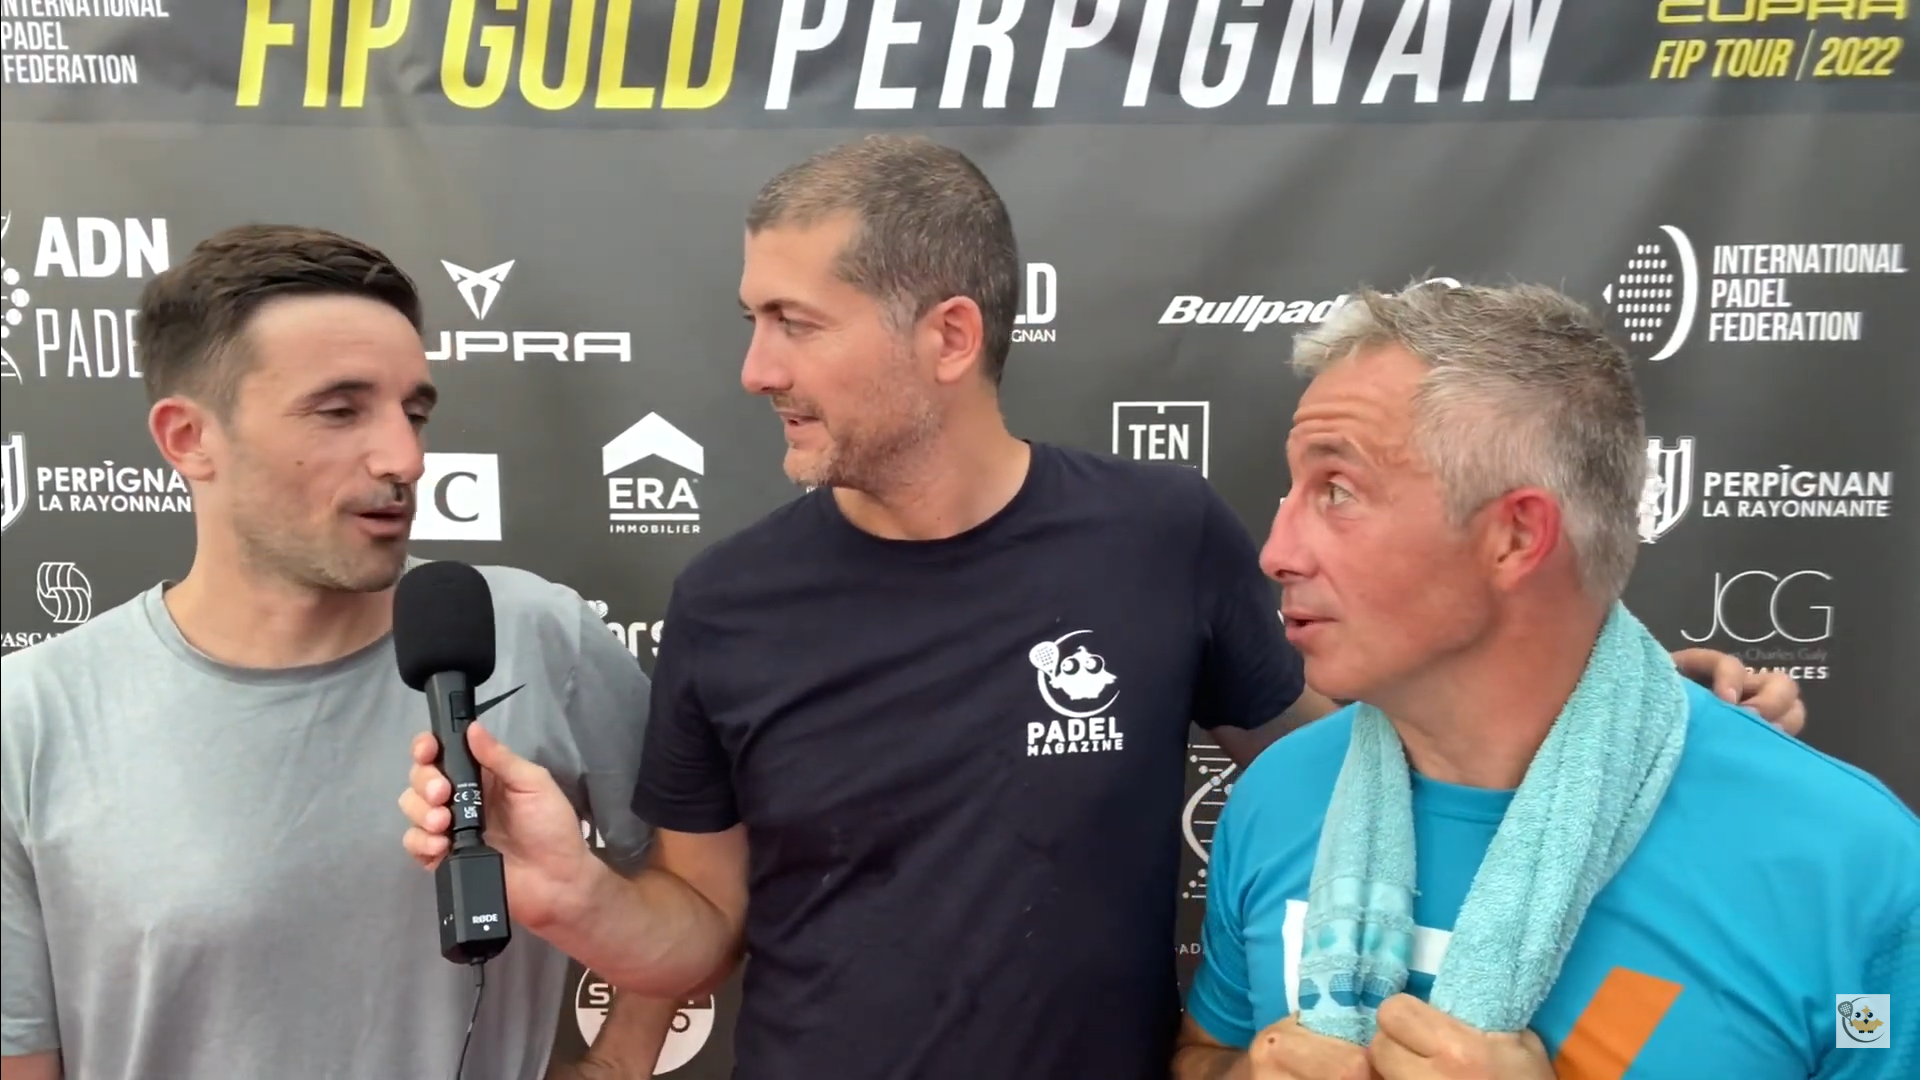 JP Pellicer 和 Dominique Campana Fip Gold Perpignan ITW